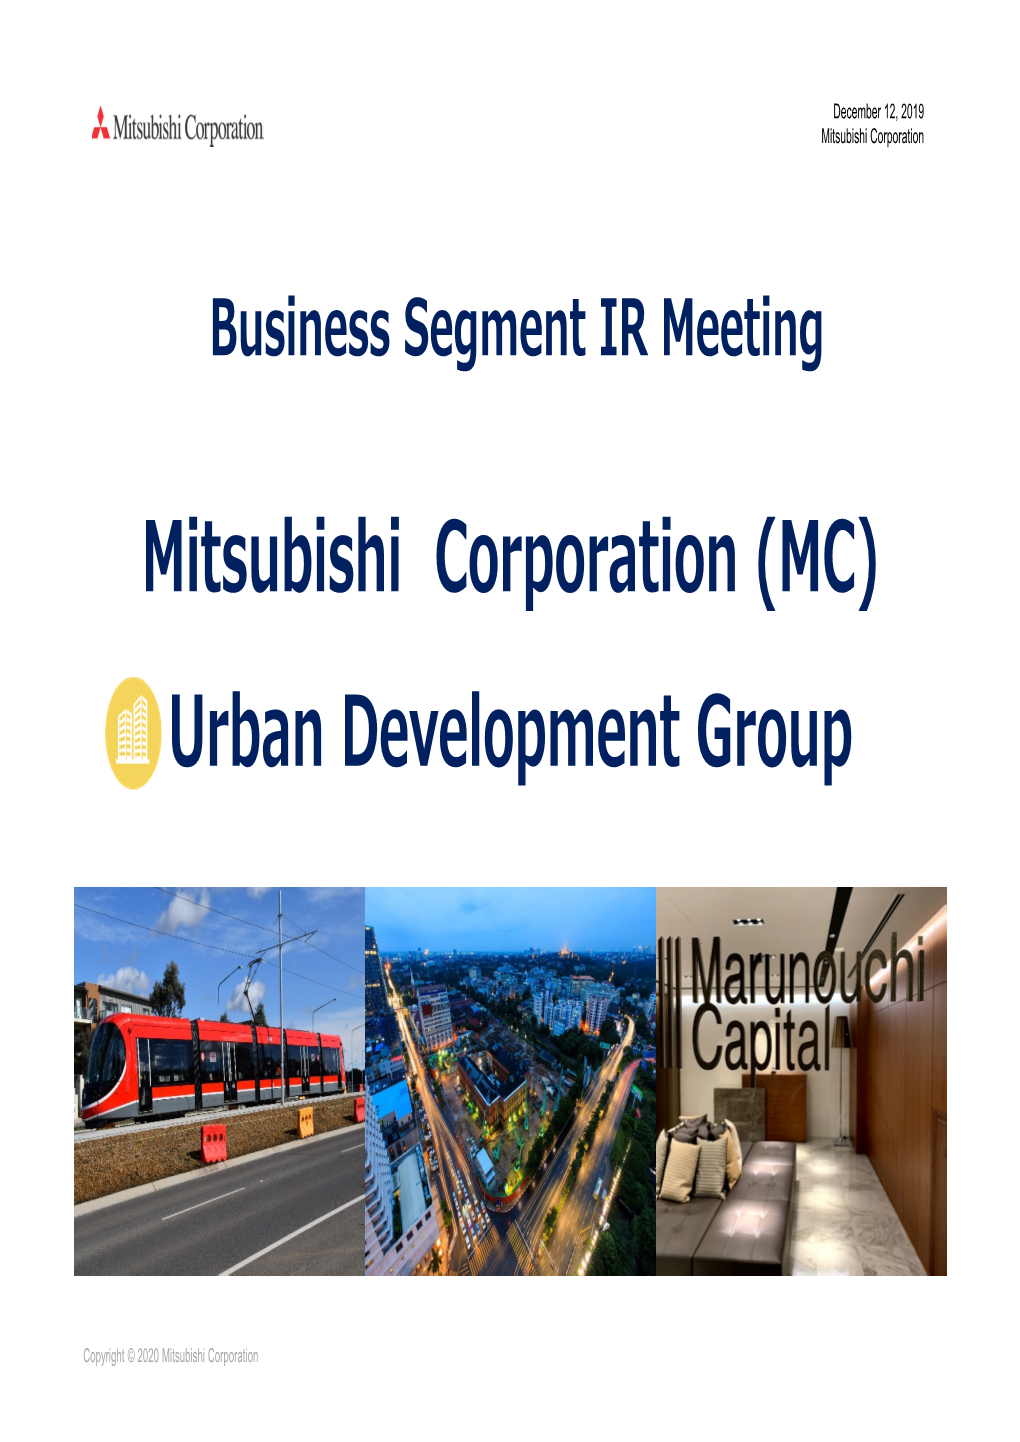 Mitsubishi Corporation (MC) Urban Development Group